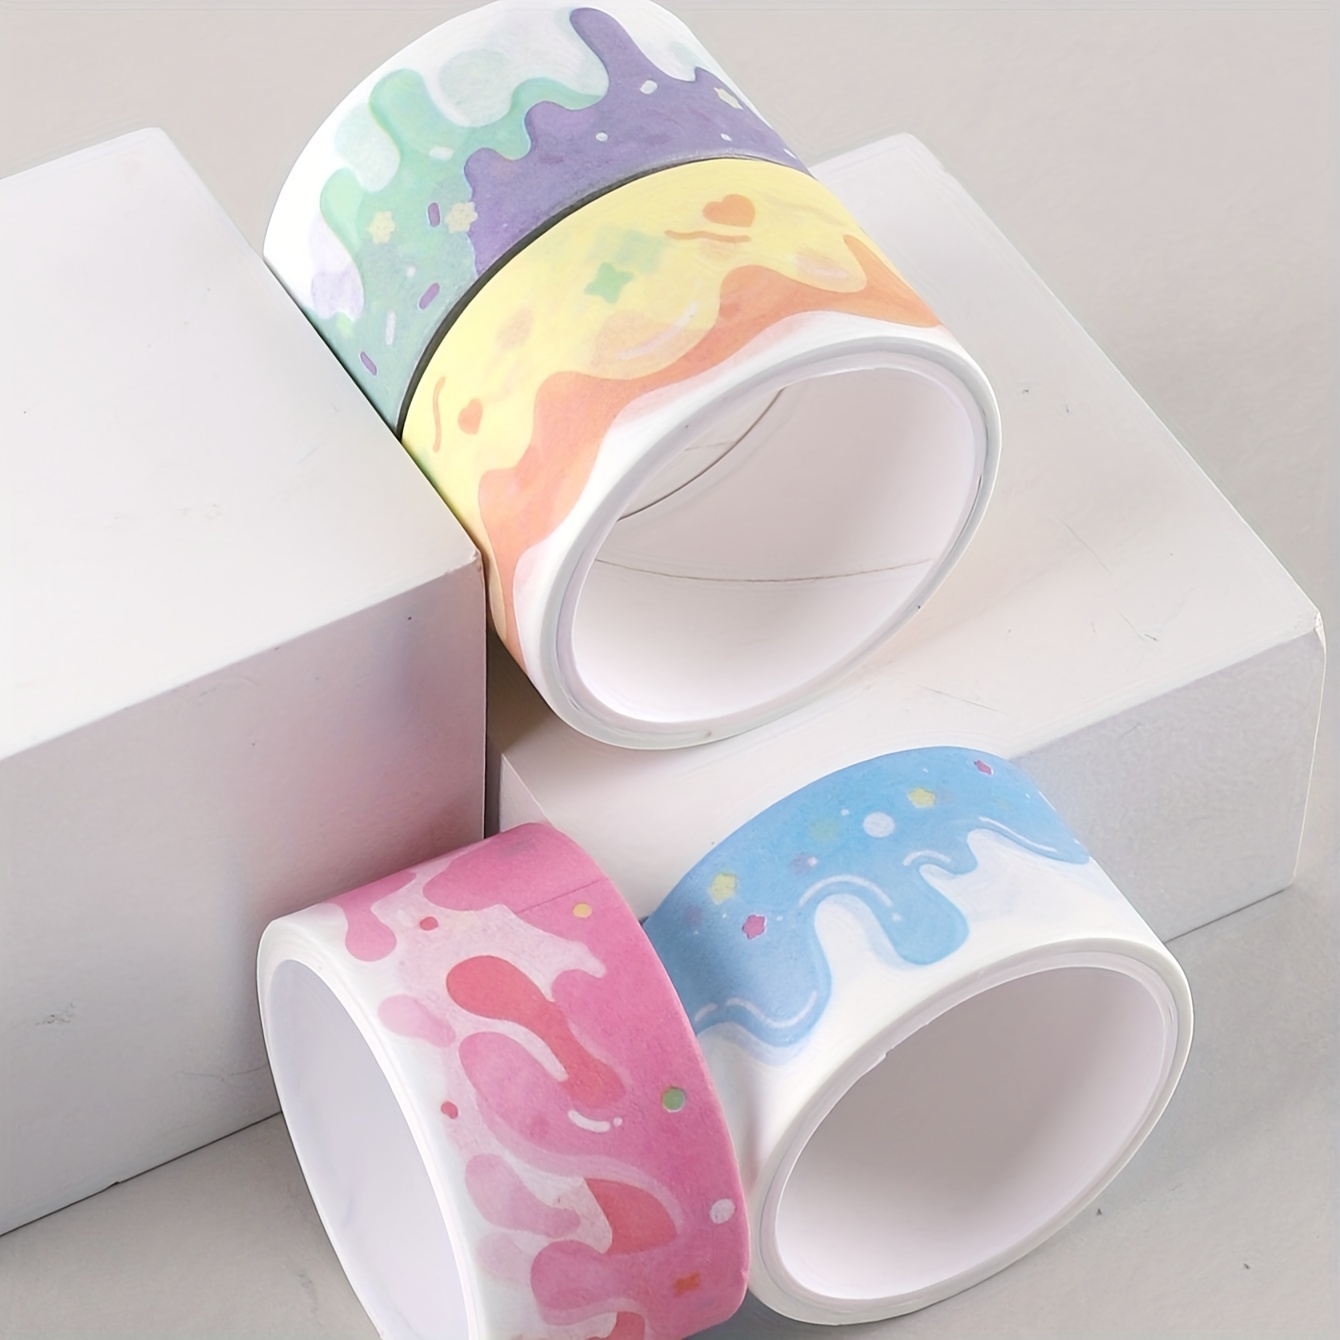 Kawaii Washi Tape Set, Aesthetic Japanese Decorative Masking Stickers for  Journaling, Scrapbooking, Kids DIY Crafts, Cute School Supplies Student